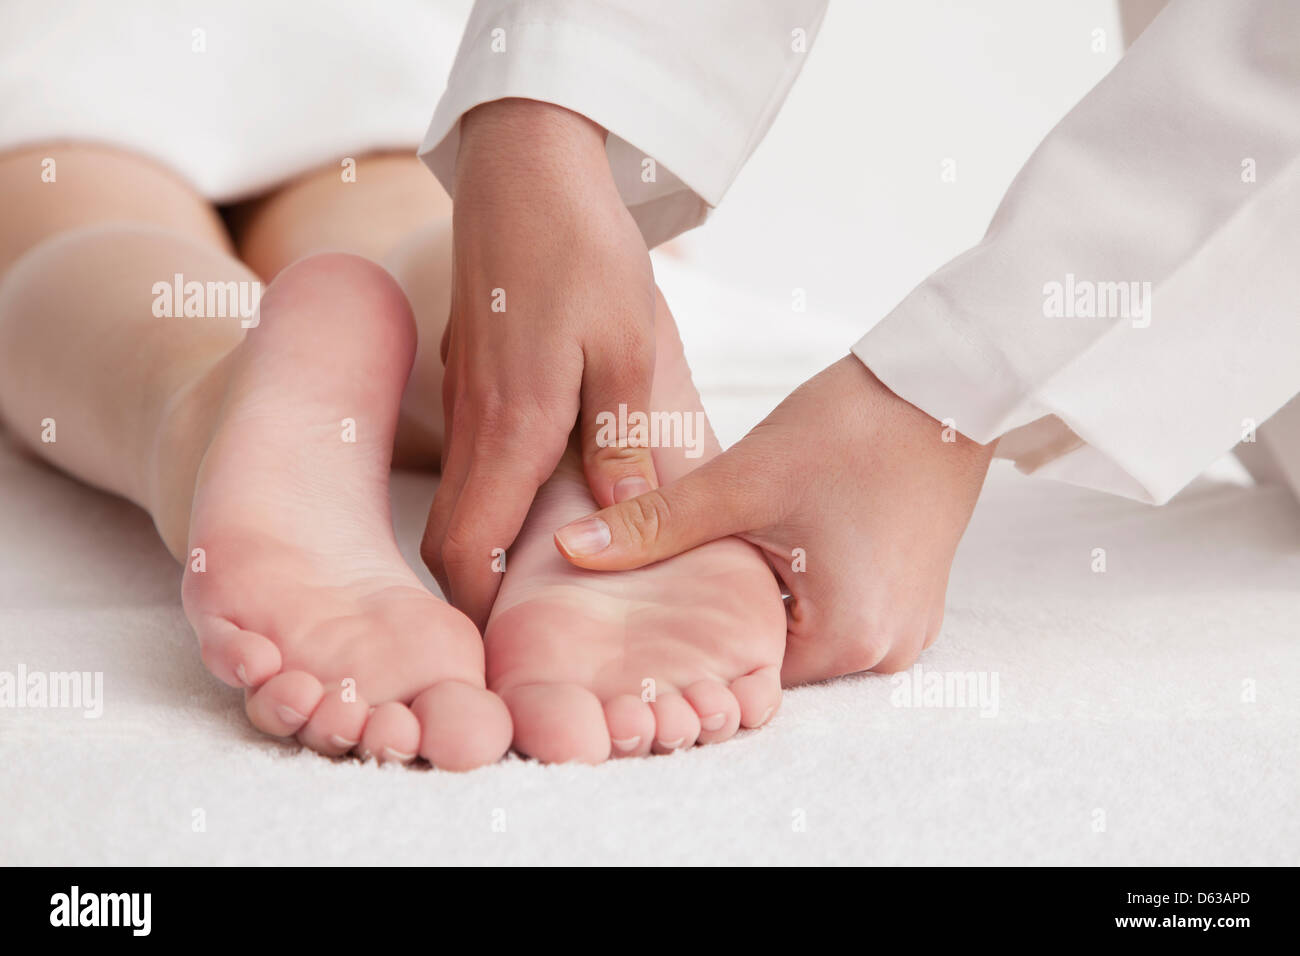 Woman receiving foot massage Stock Photo